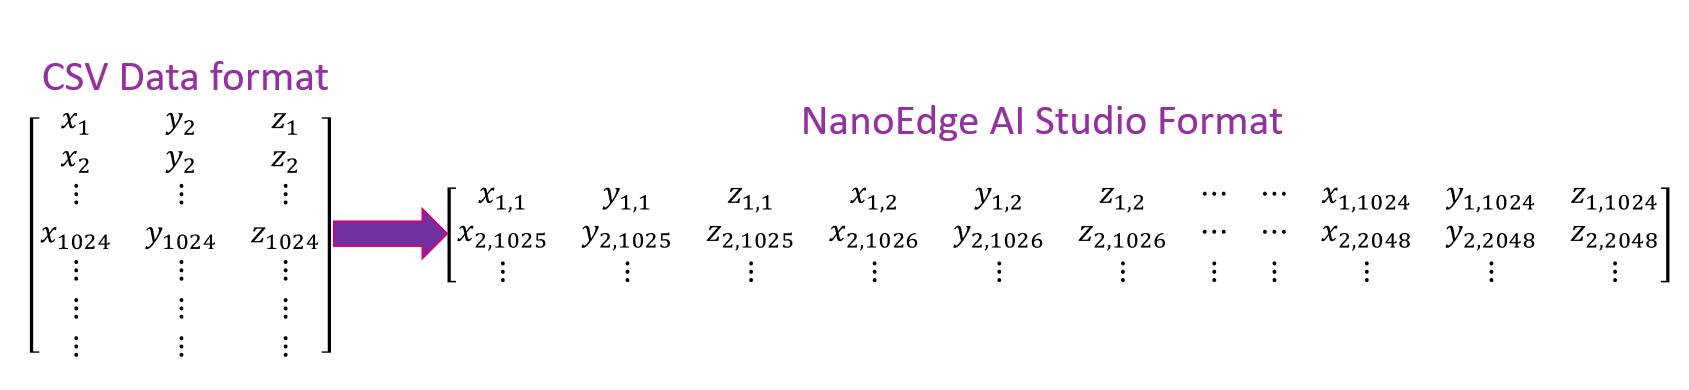 Data formating for NanoEdgeTM AI Studio